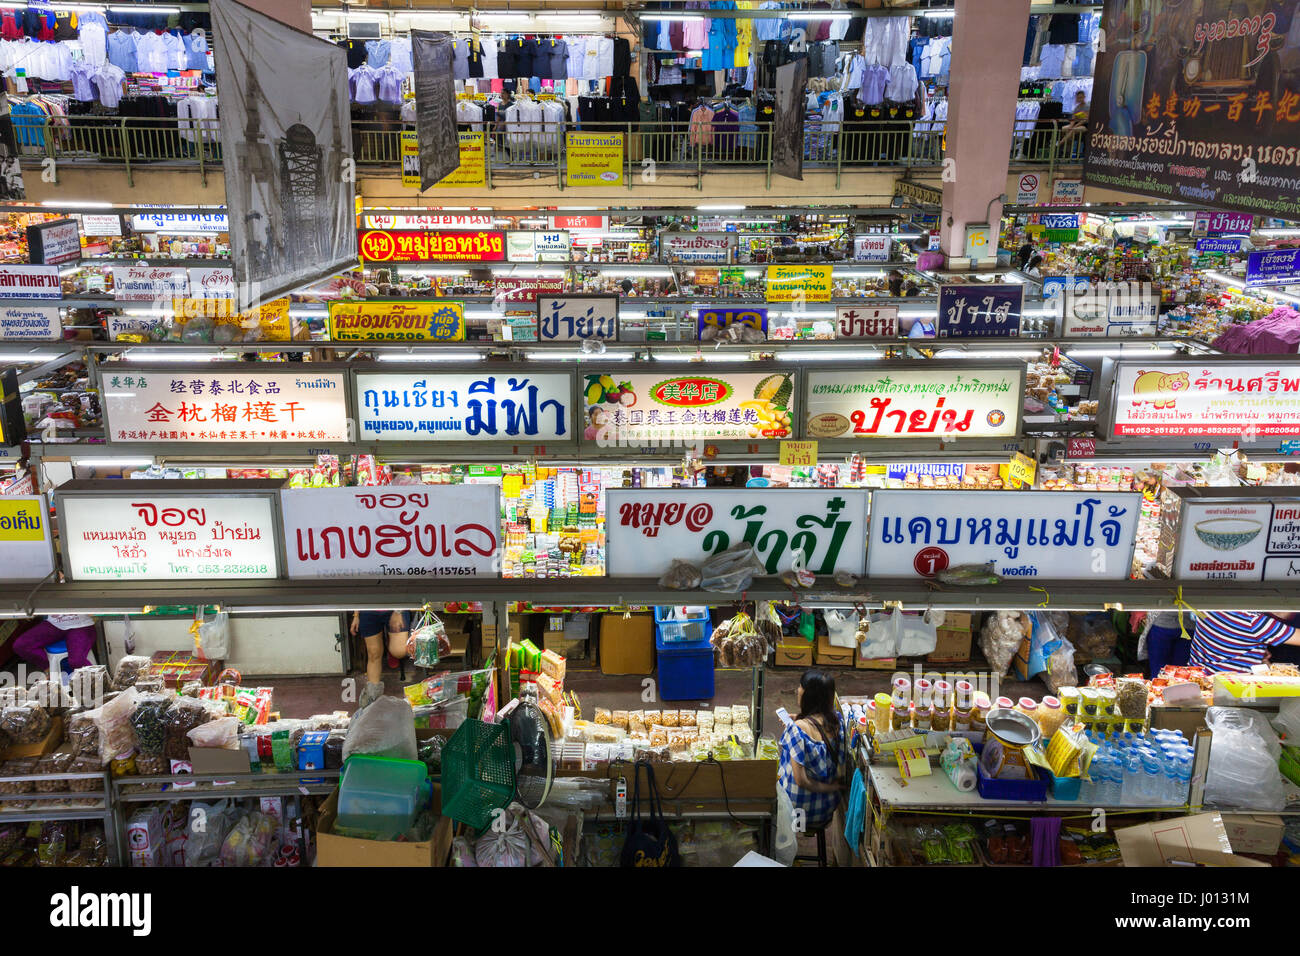 Chiang Mai, Thailand - 27. August 2016: High Angle-Blick auf den Warorot Markt Stände am 27. August 2016 in Chiang Mai, Thailand. Stockfoto